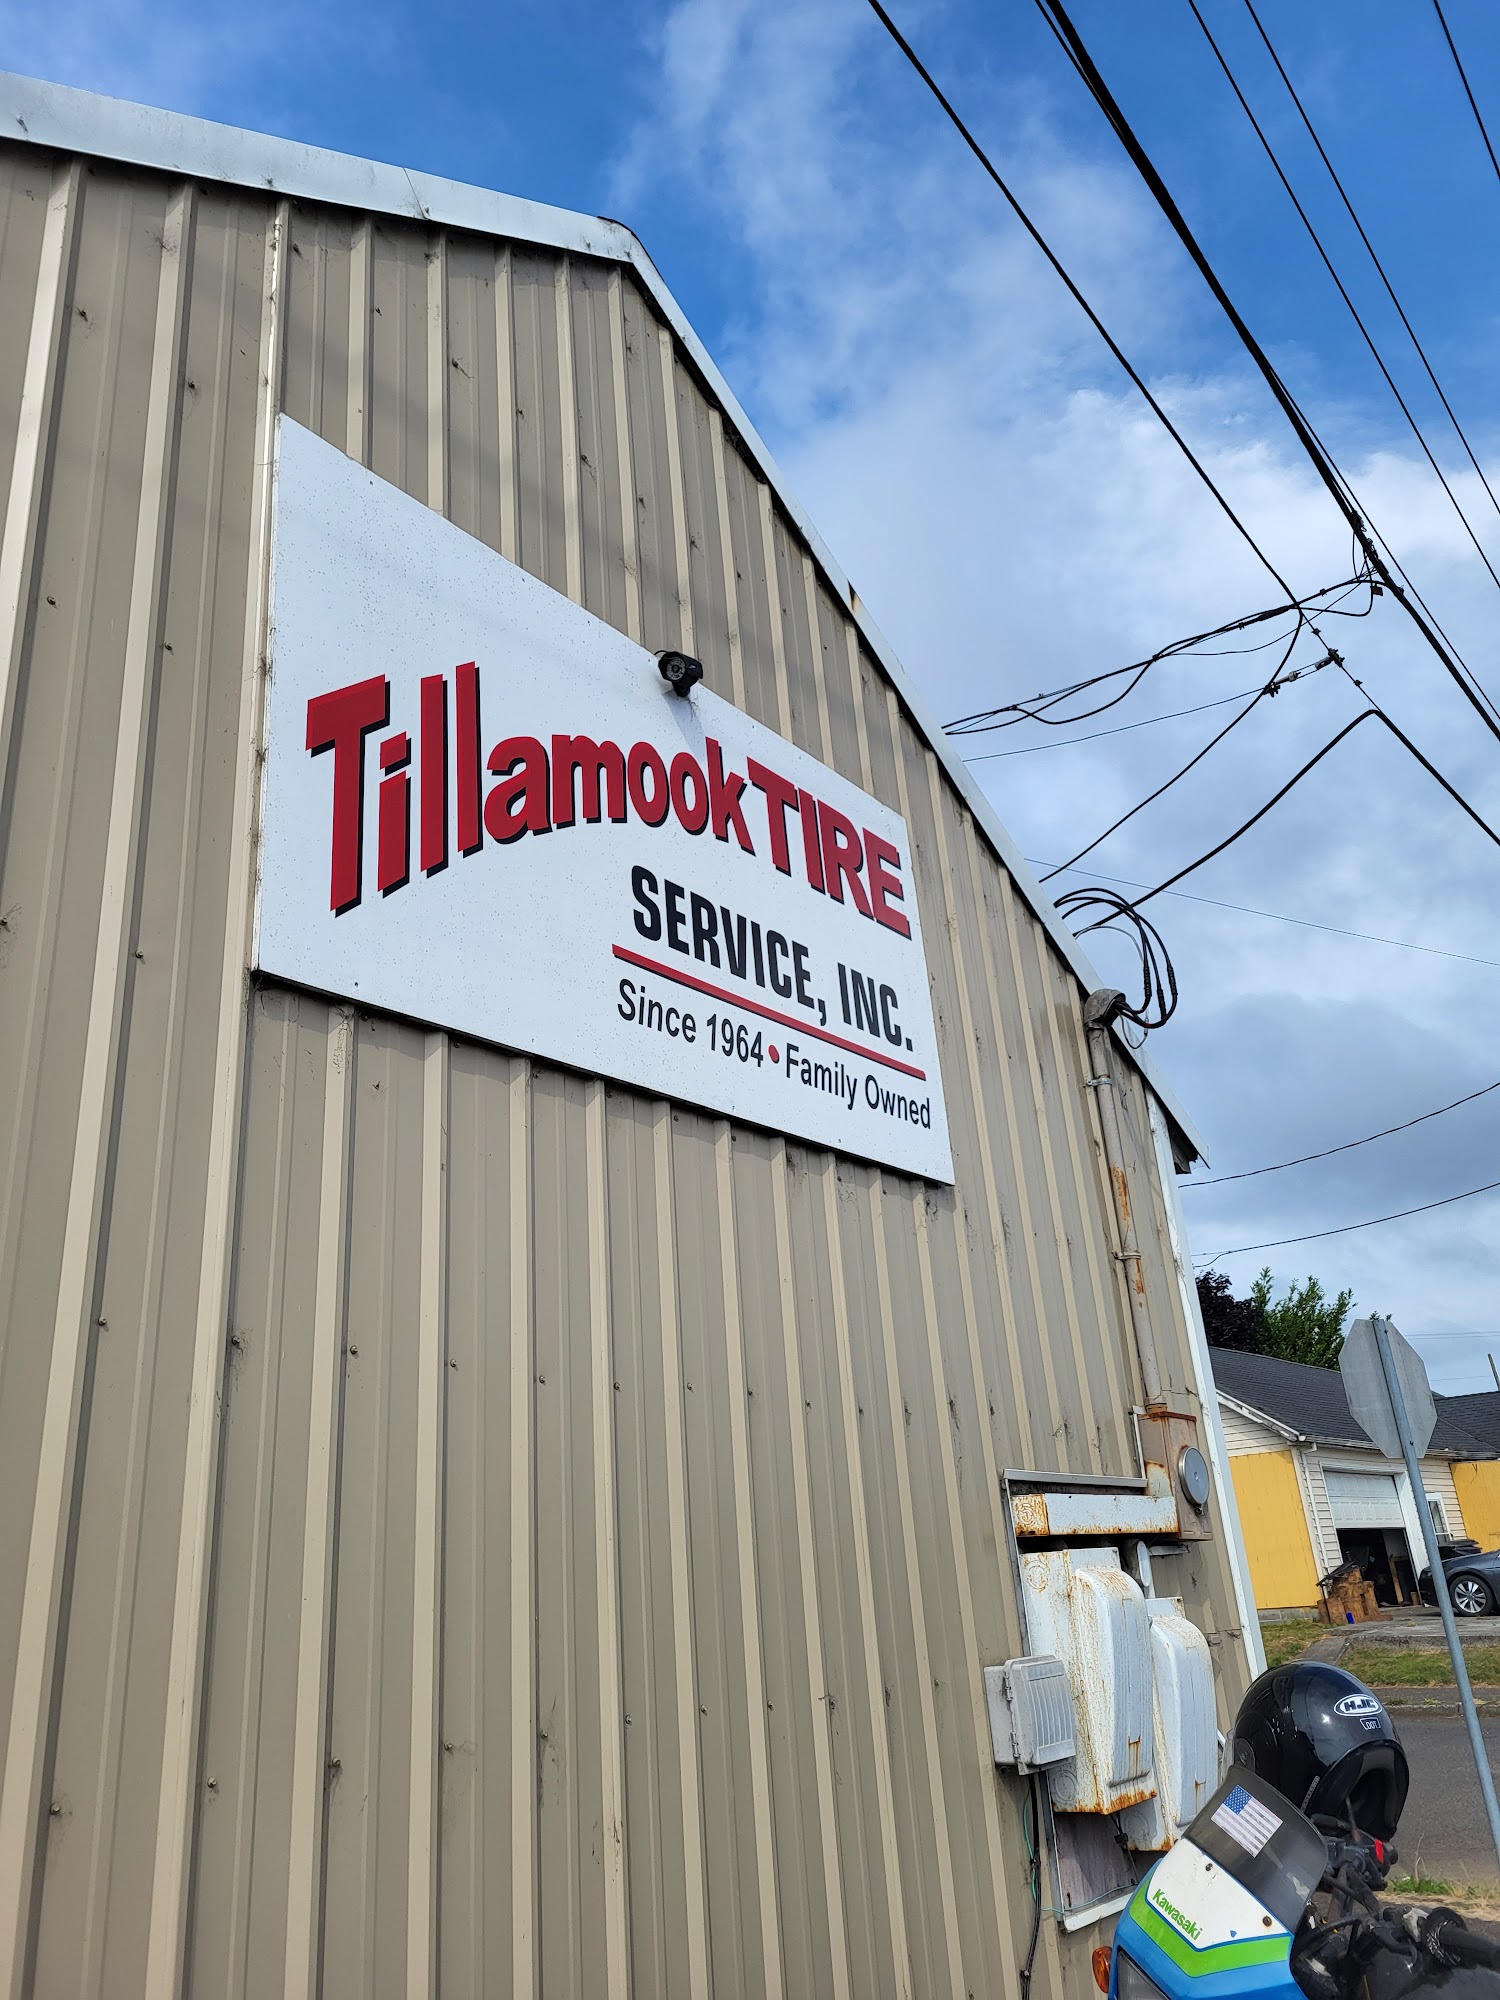 Tillamook Tire Services Inc